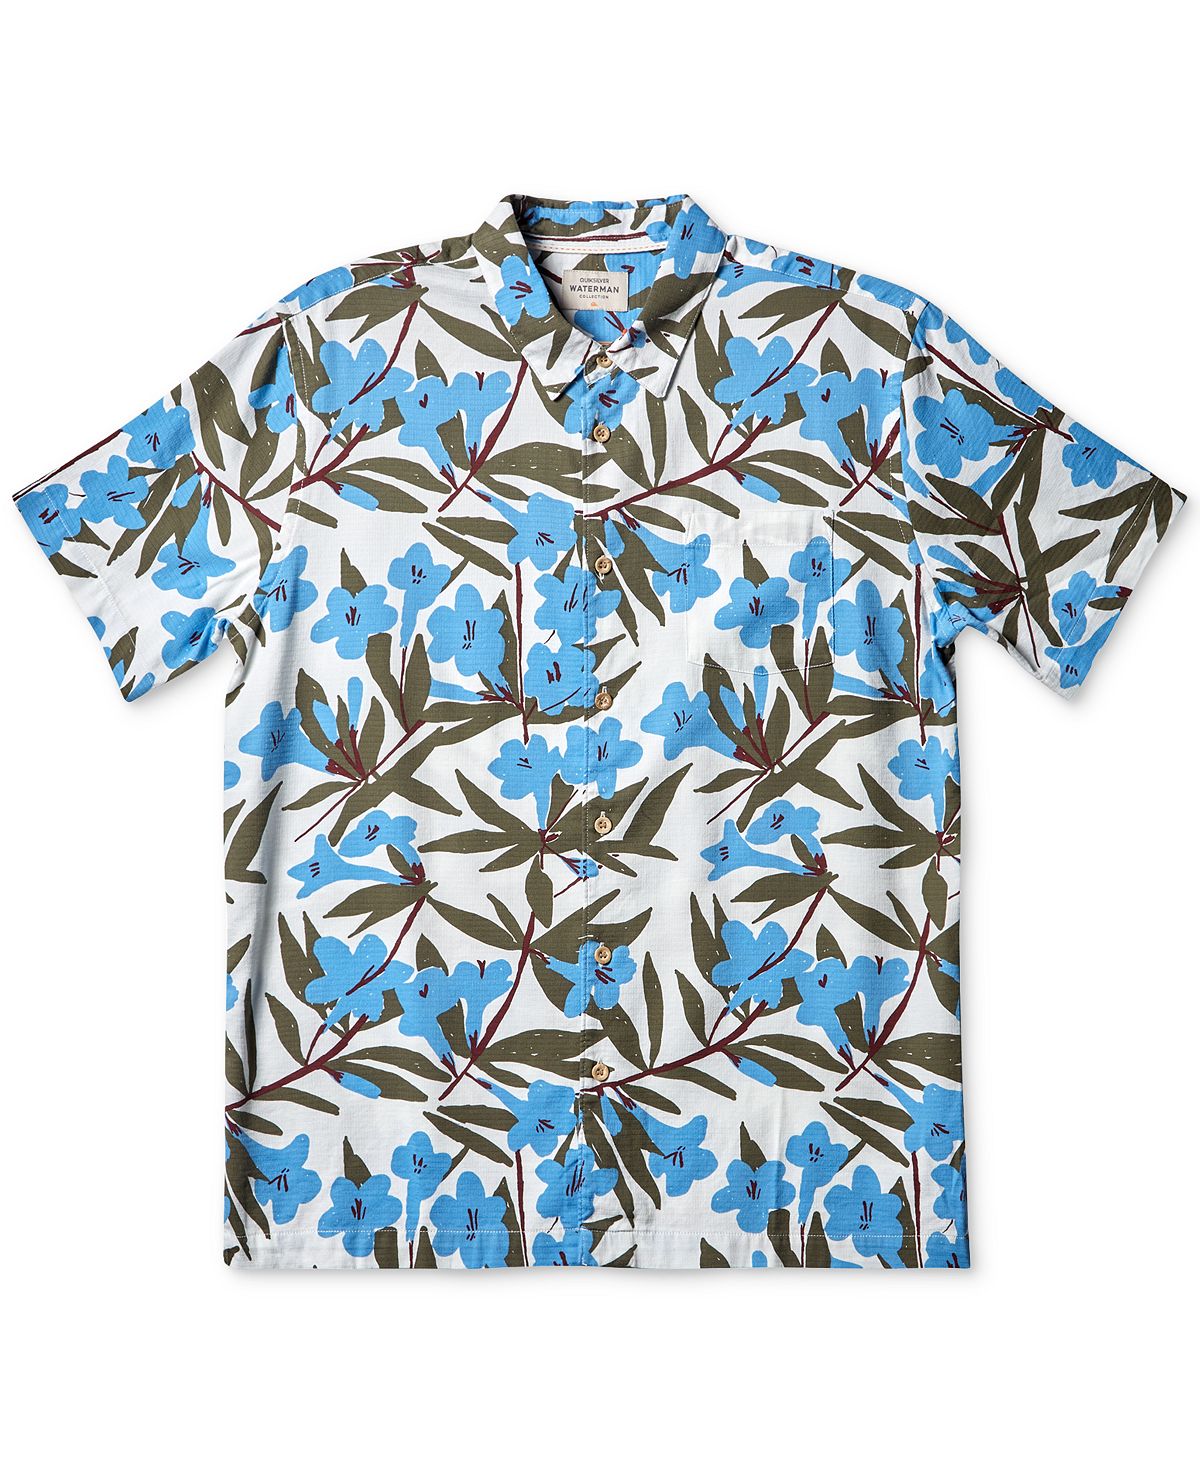 Мужская рубашка с тропическим принтом Quiksilver Quiksilver Waterman waterman carene s0700380 black gt